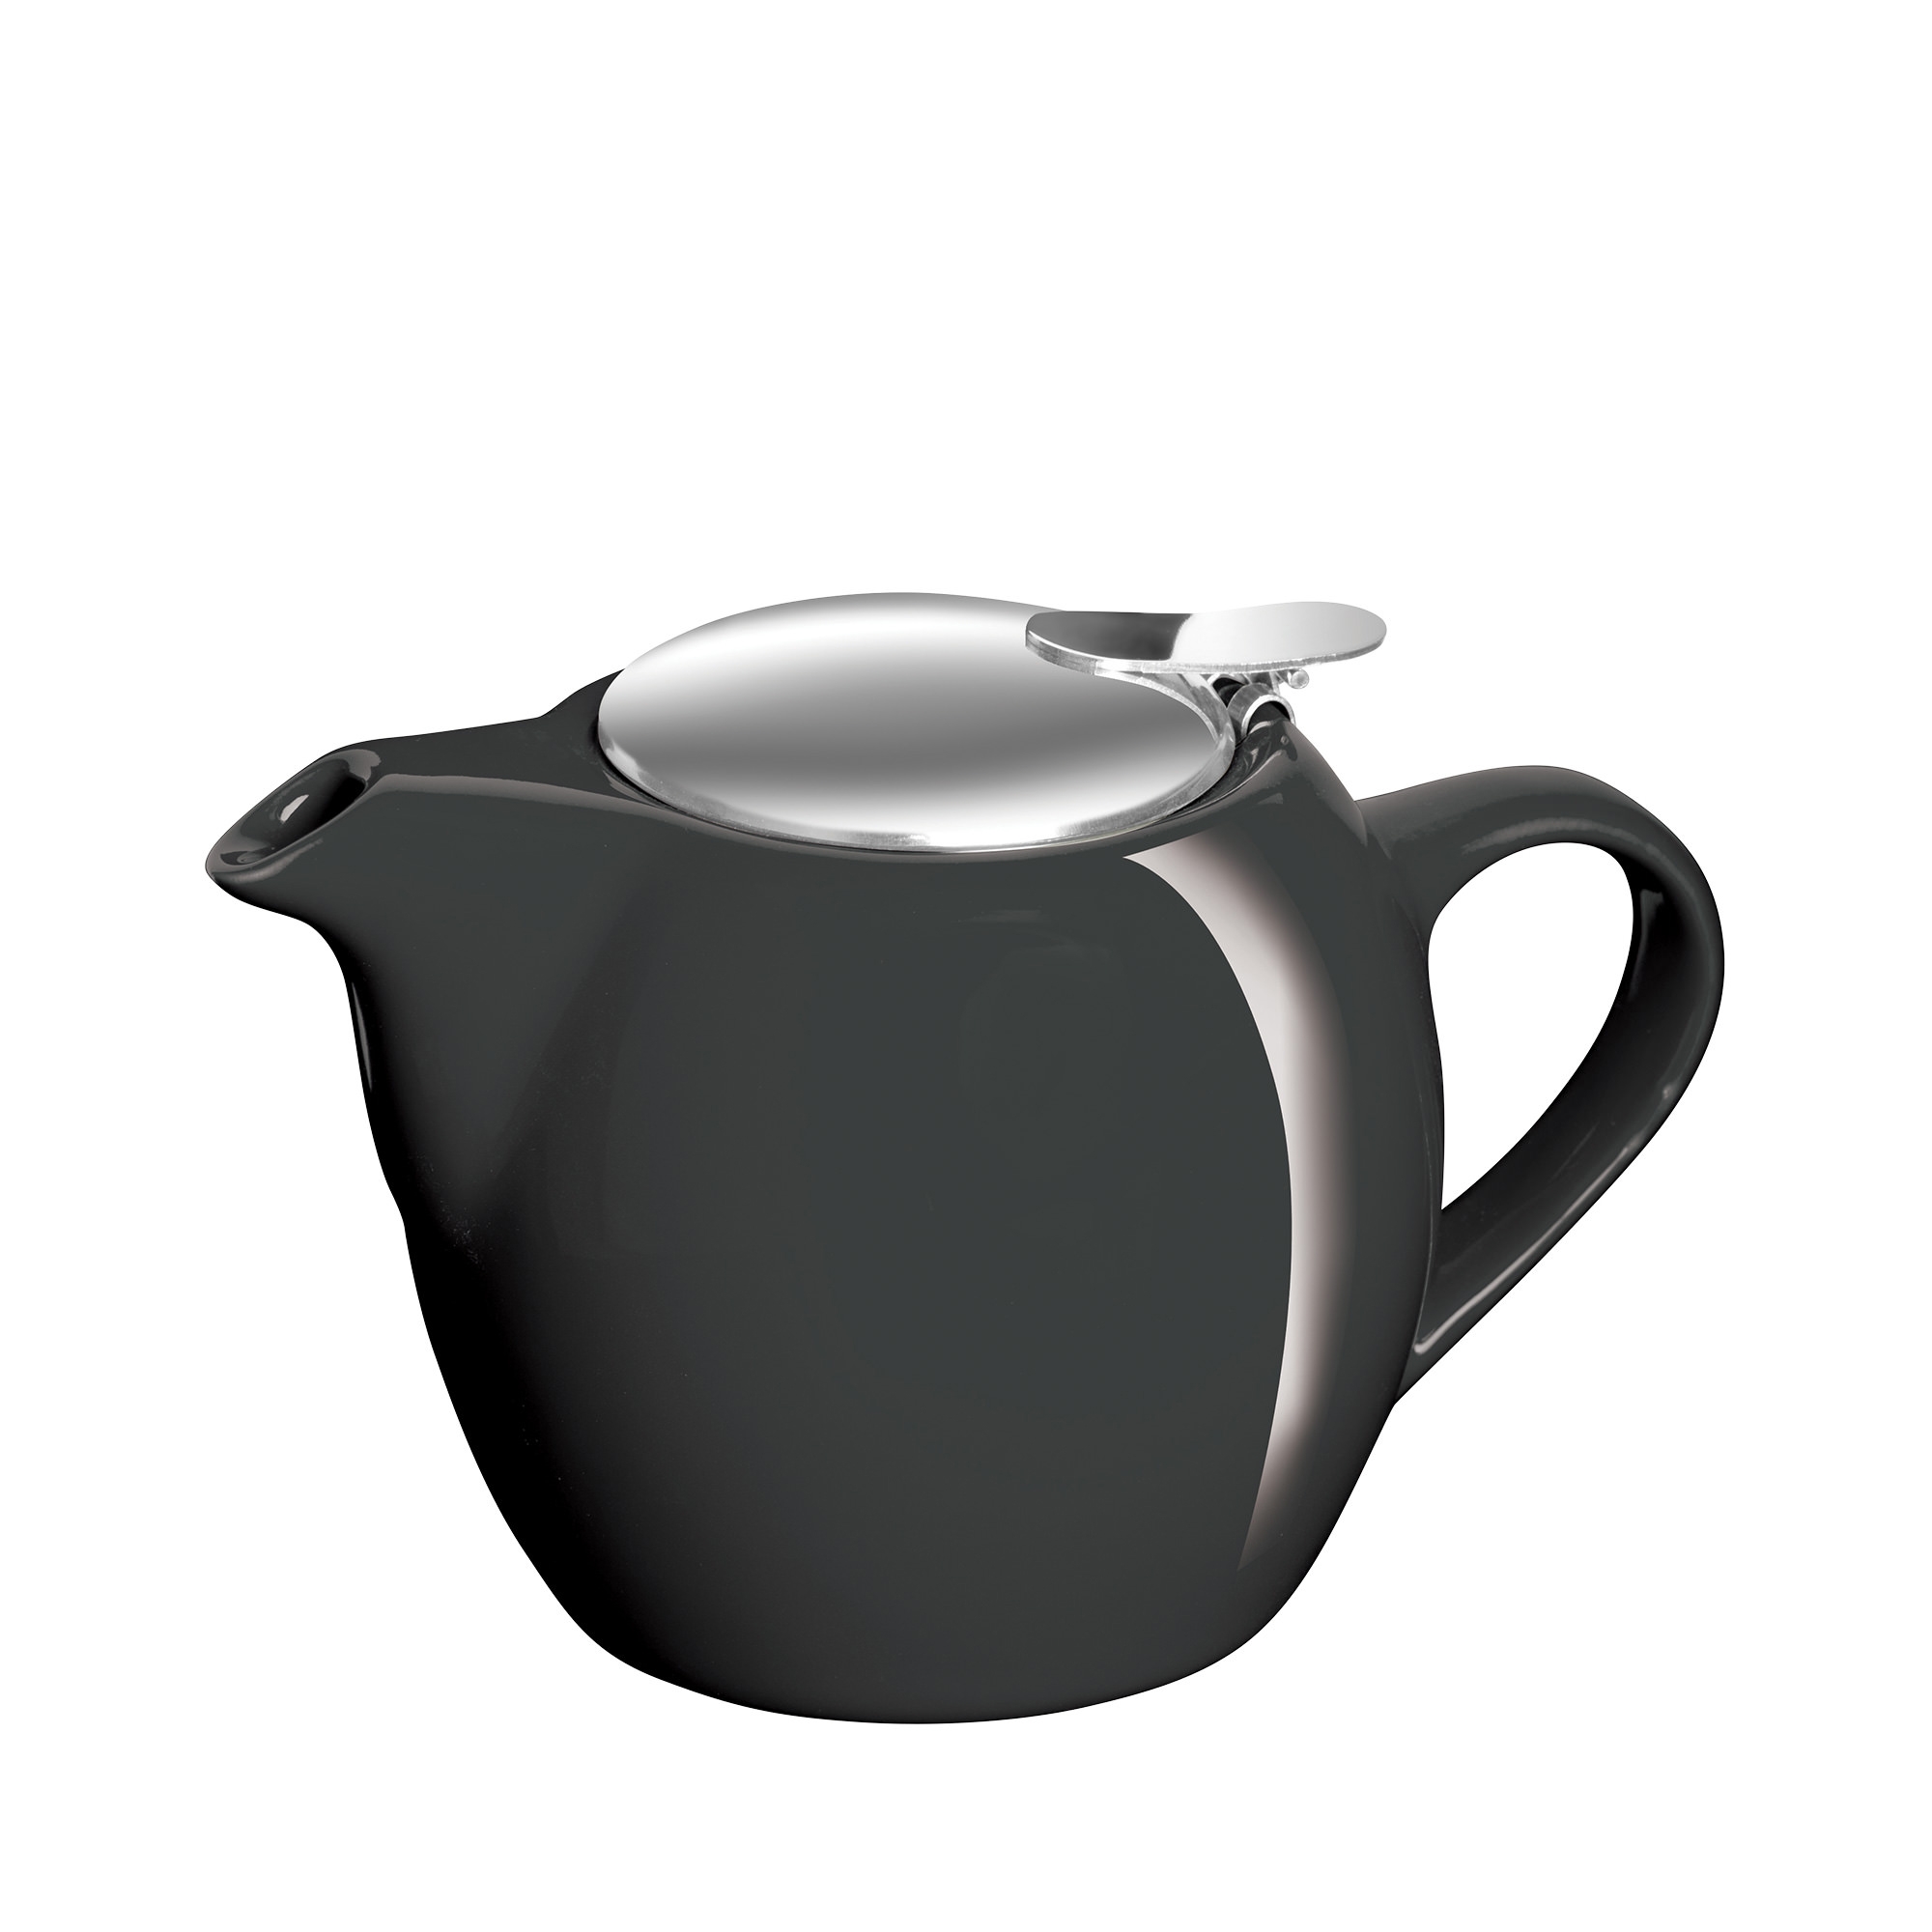 Avanti Camelia Ceramic Teapot 500ml Pitch Black Image 1